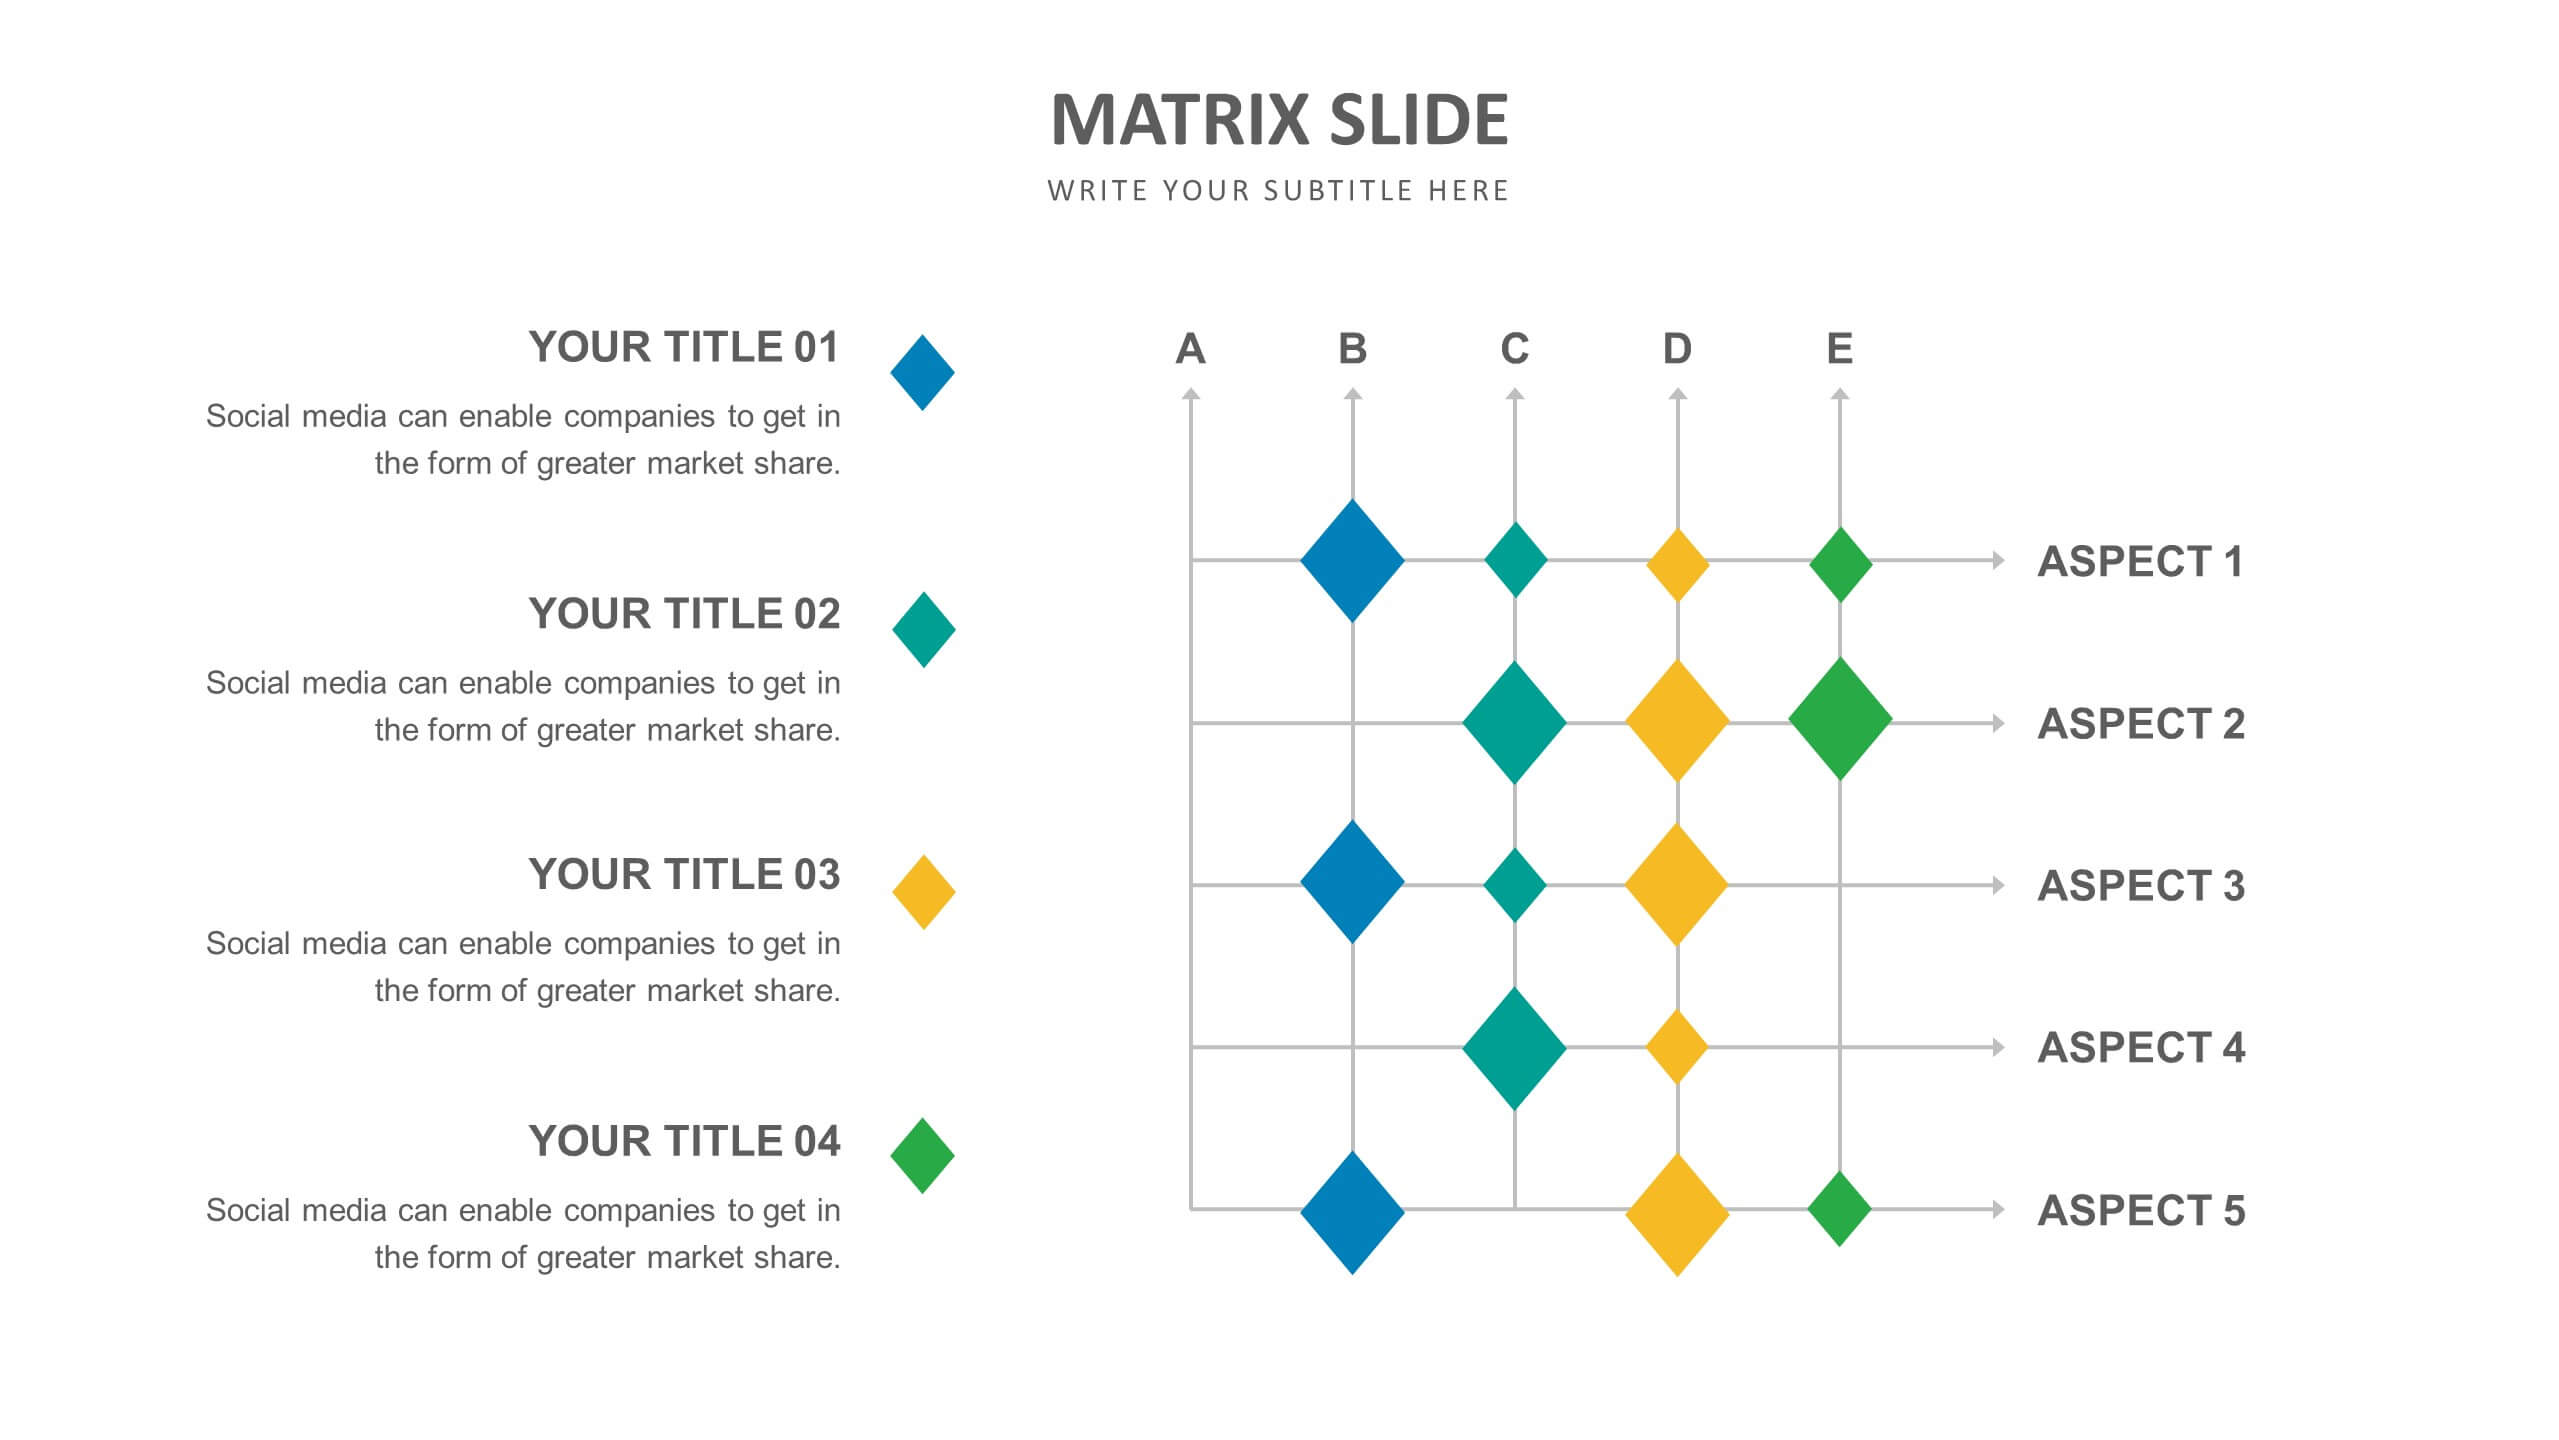 example of matrix presentation